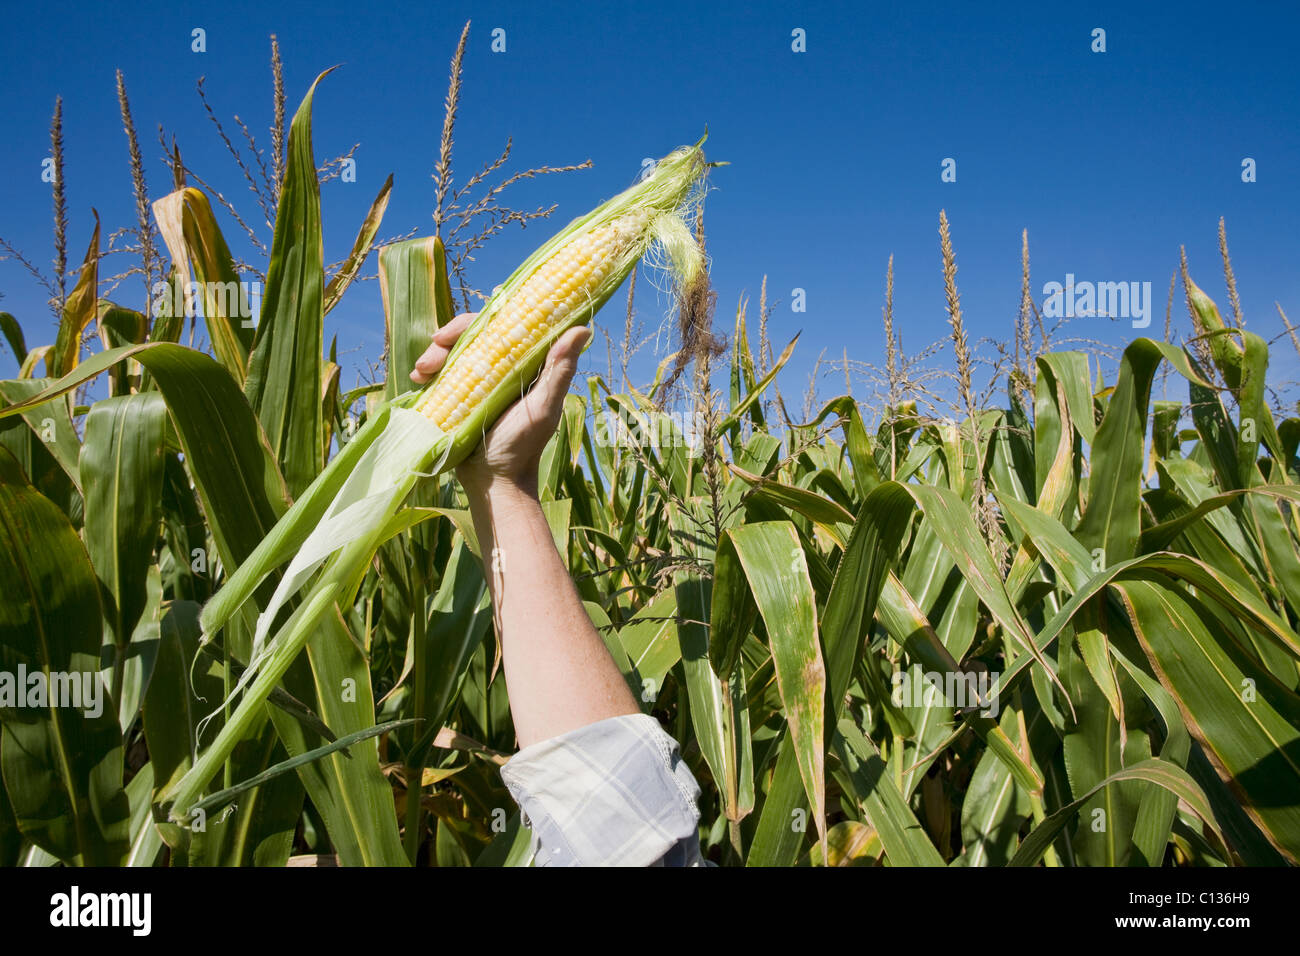 USA, New Jersey, woman's hand holding corn on field Stock Photo